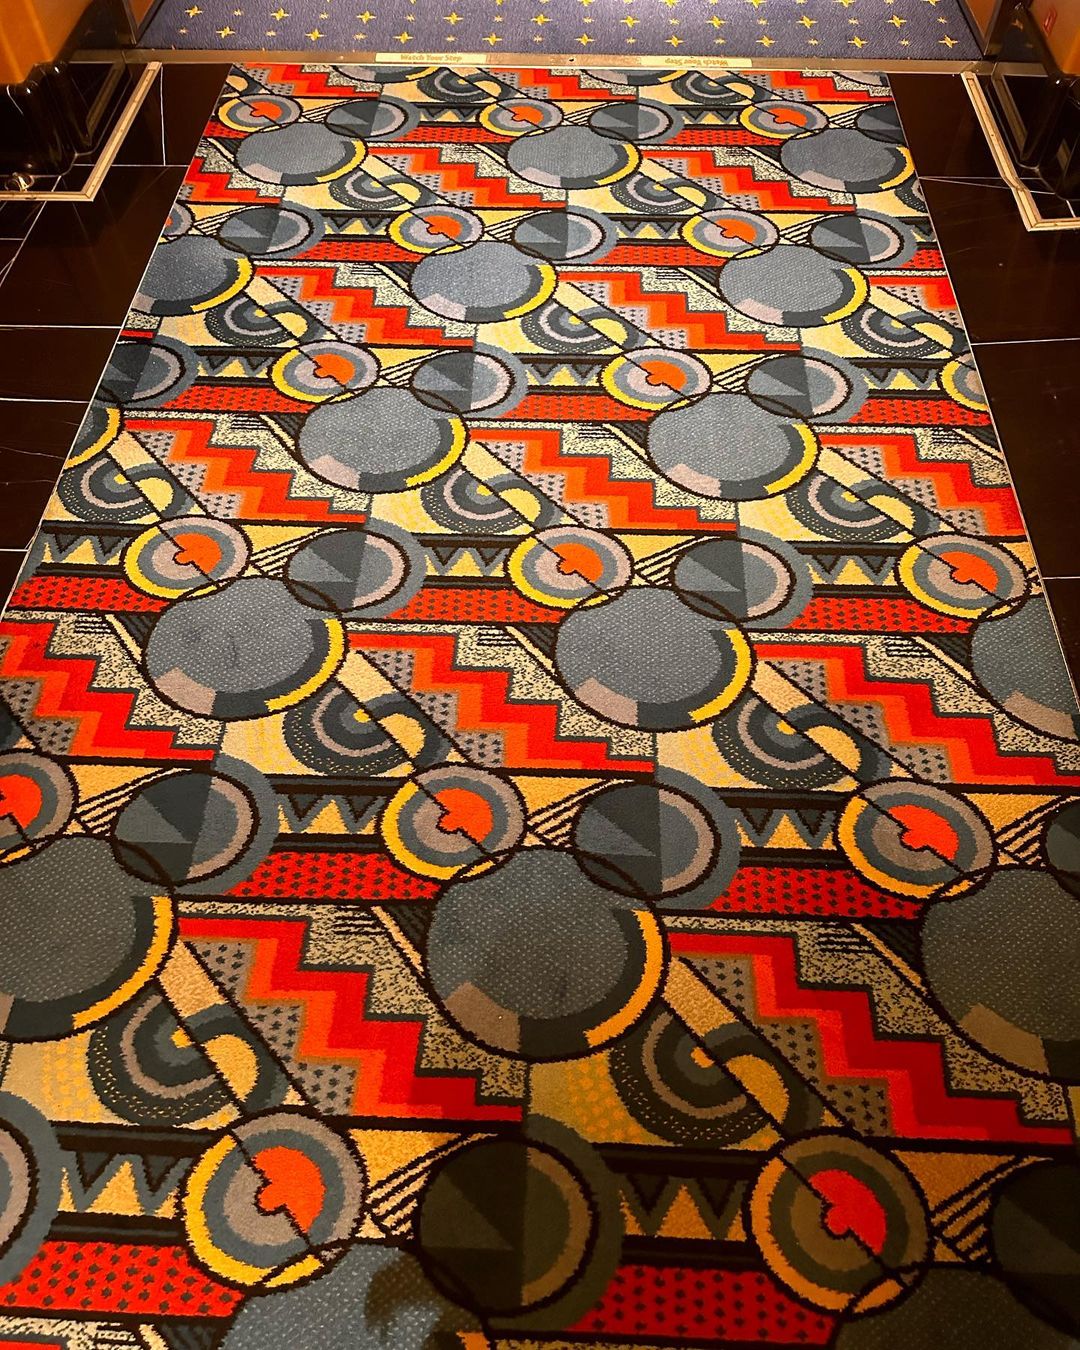 Disney Cruise Line Carpet